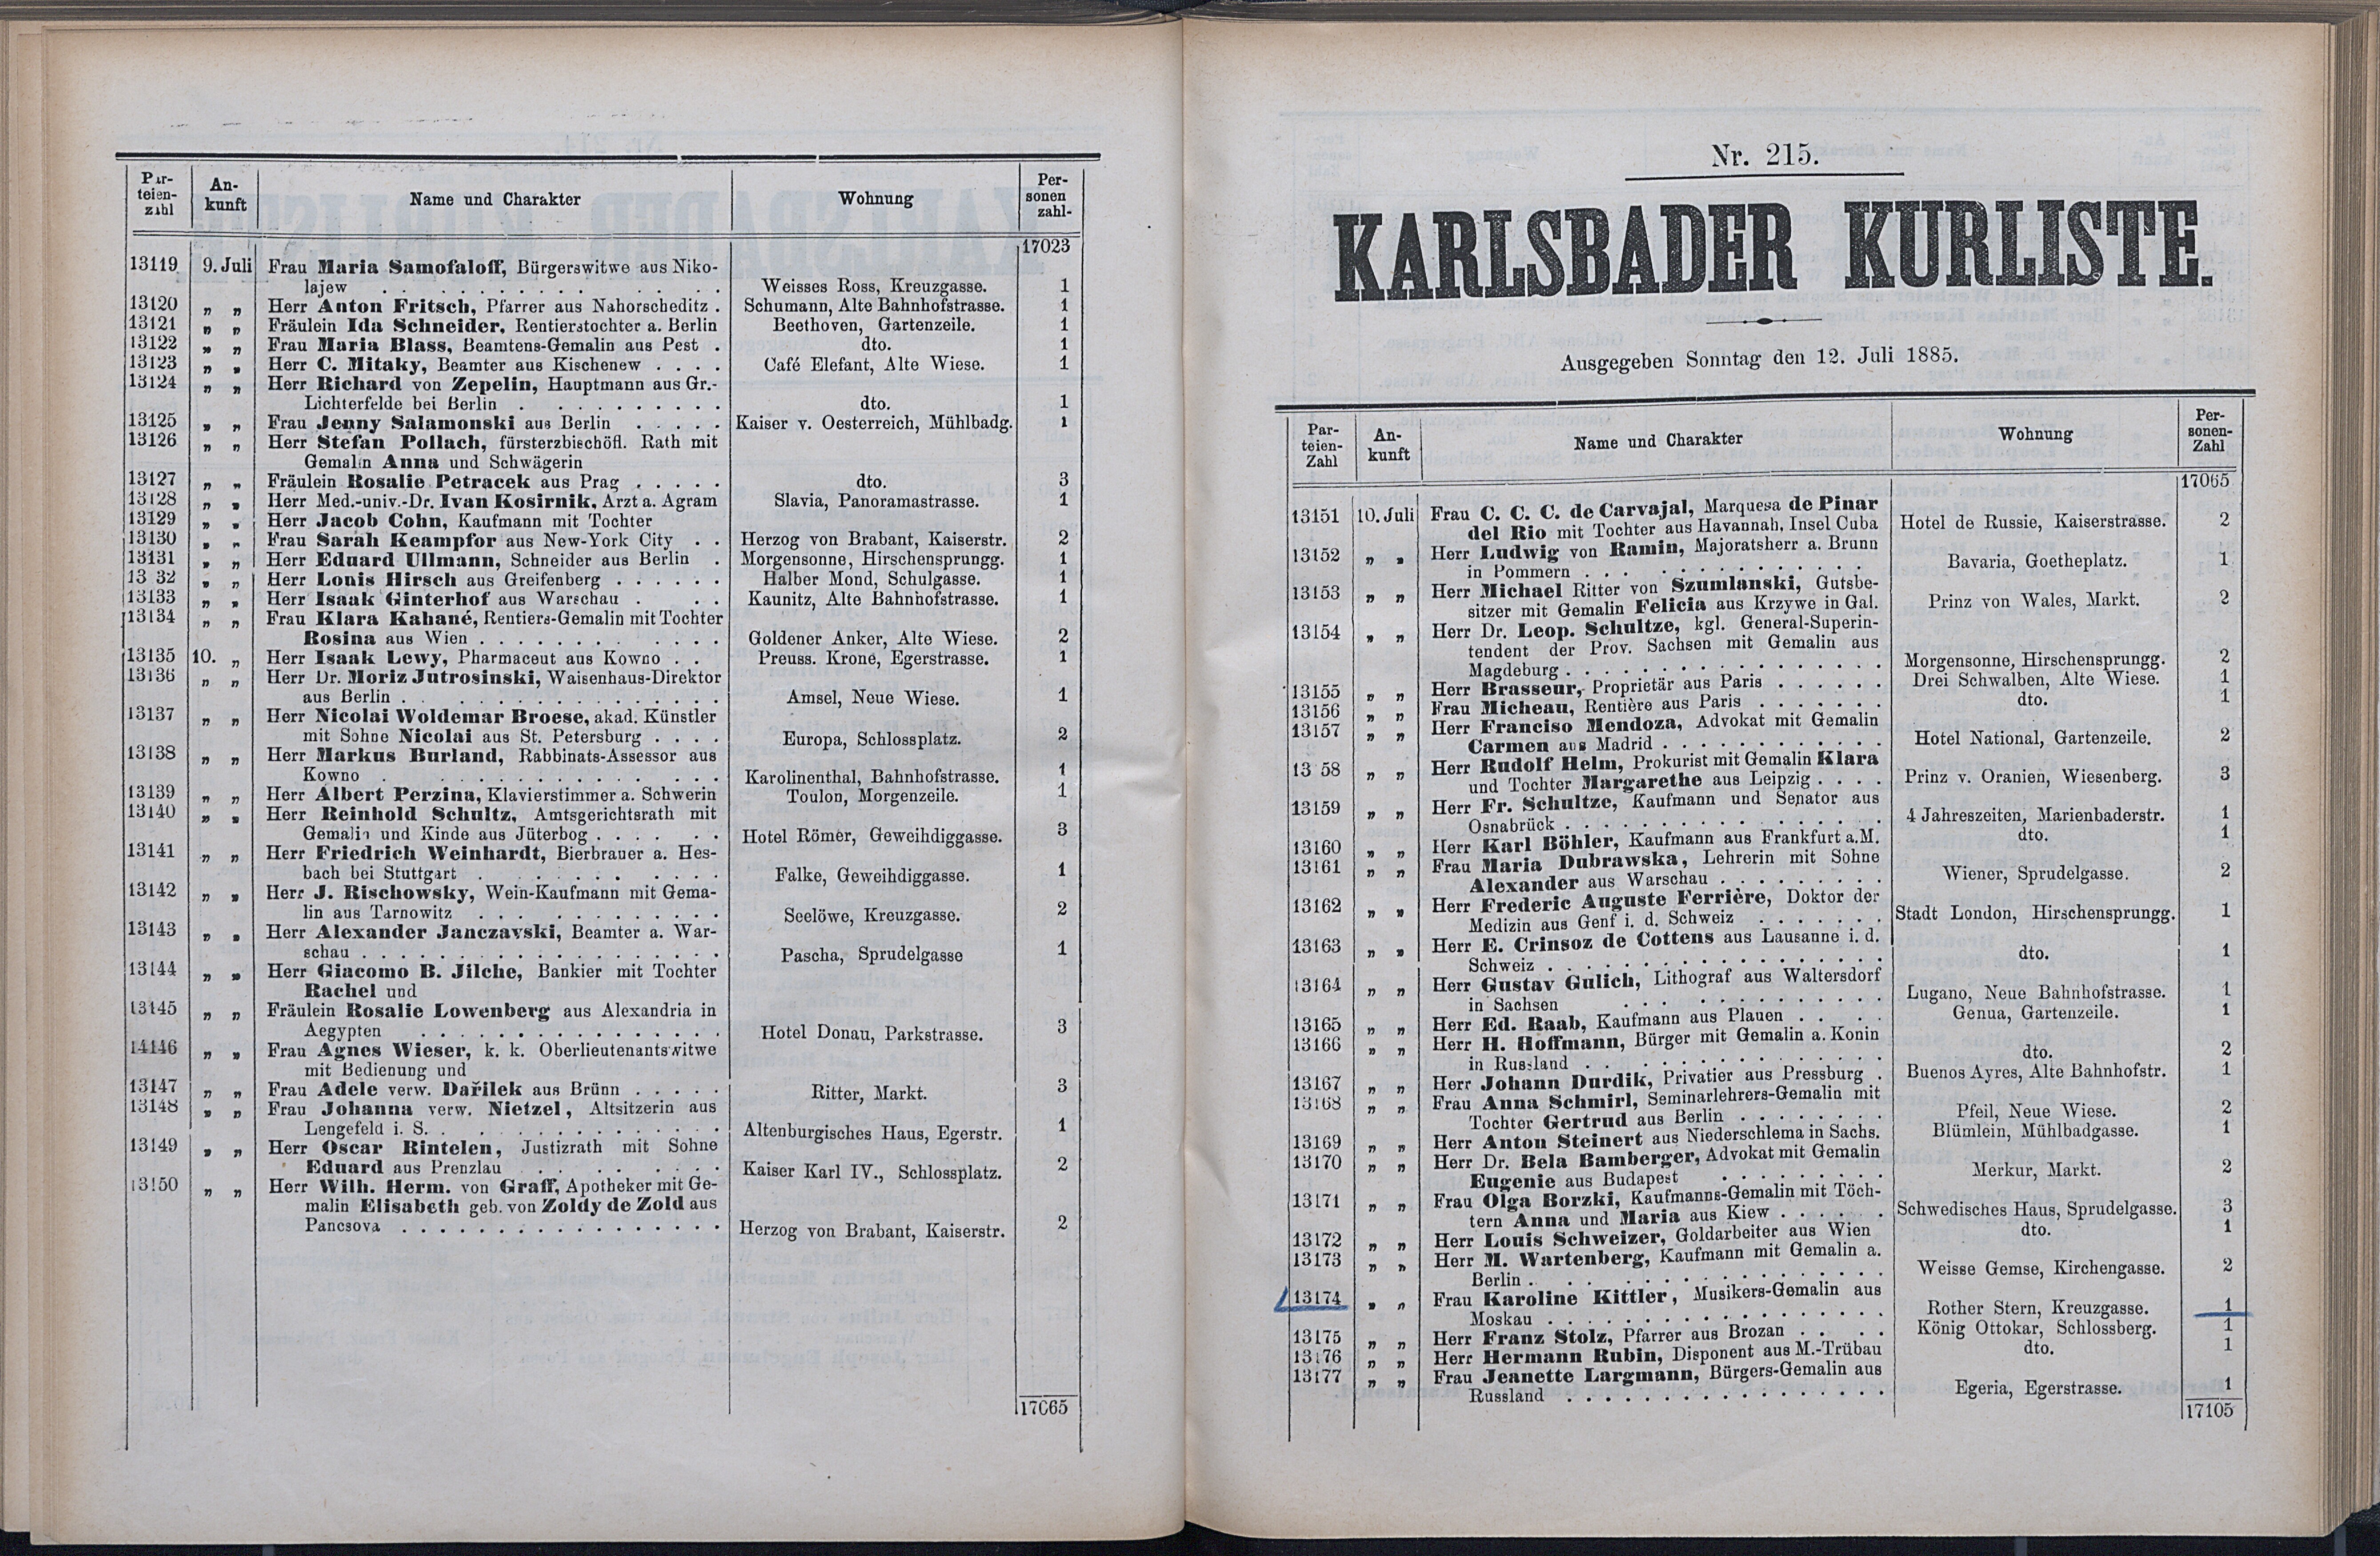 267. soap-kv_knihovna_karlsbader-kurliste-1885_2680